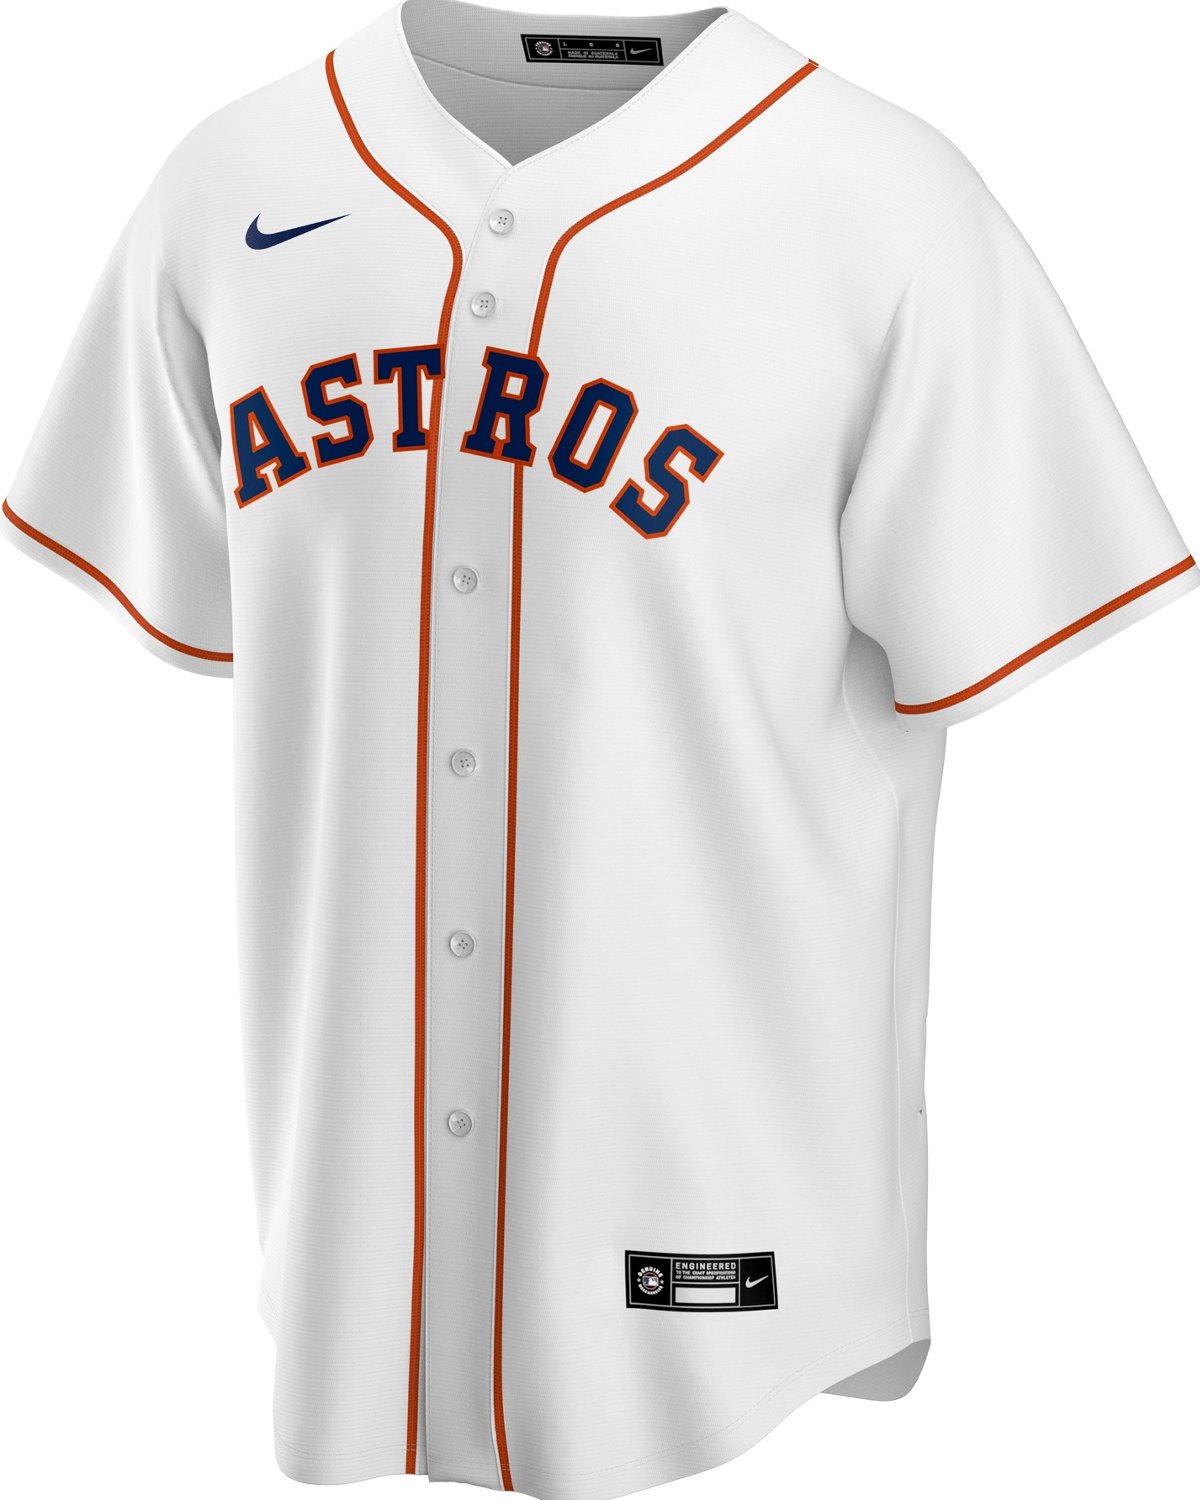 Jersey de béisbol Replica para hombre MLB Houston Astros (Yordan